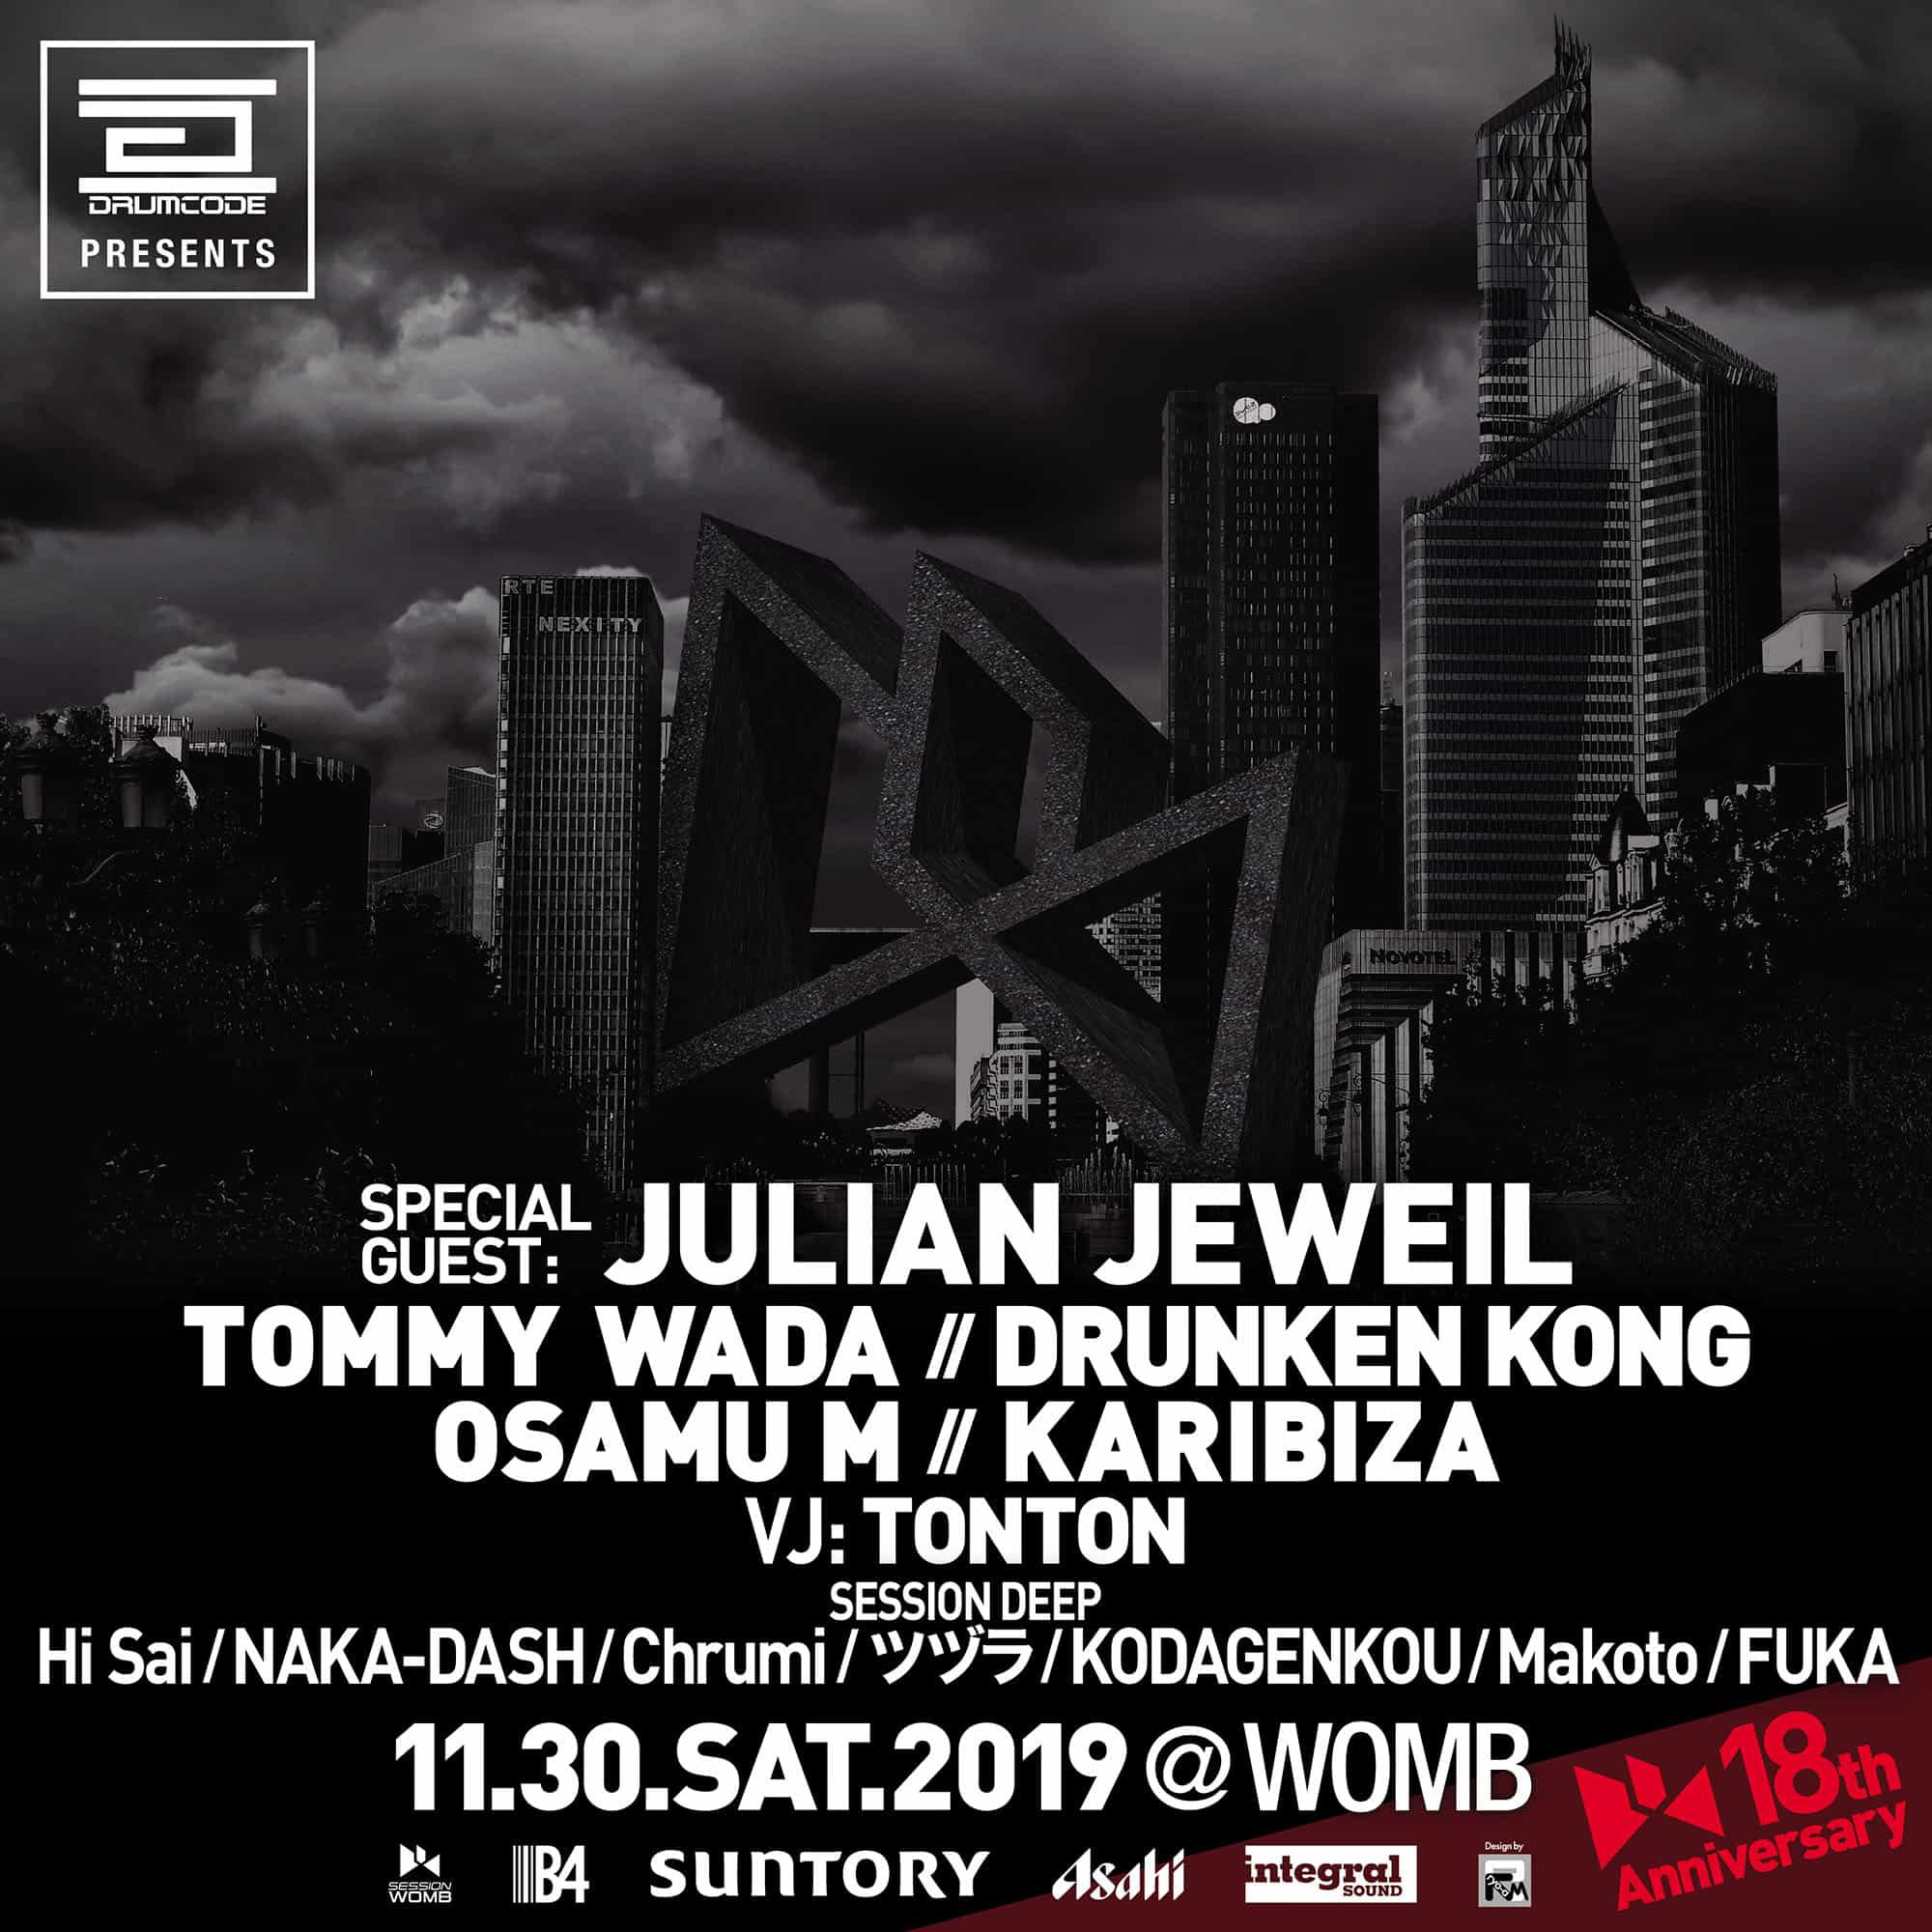 SESSION: Julian Jeweil comes to Shibuya night club